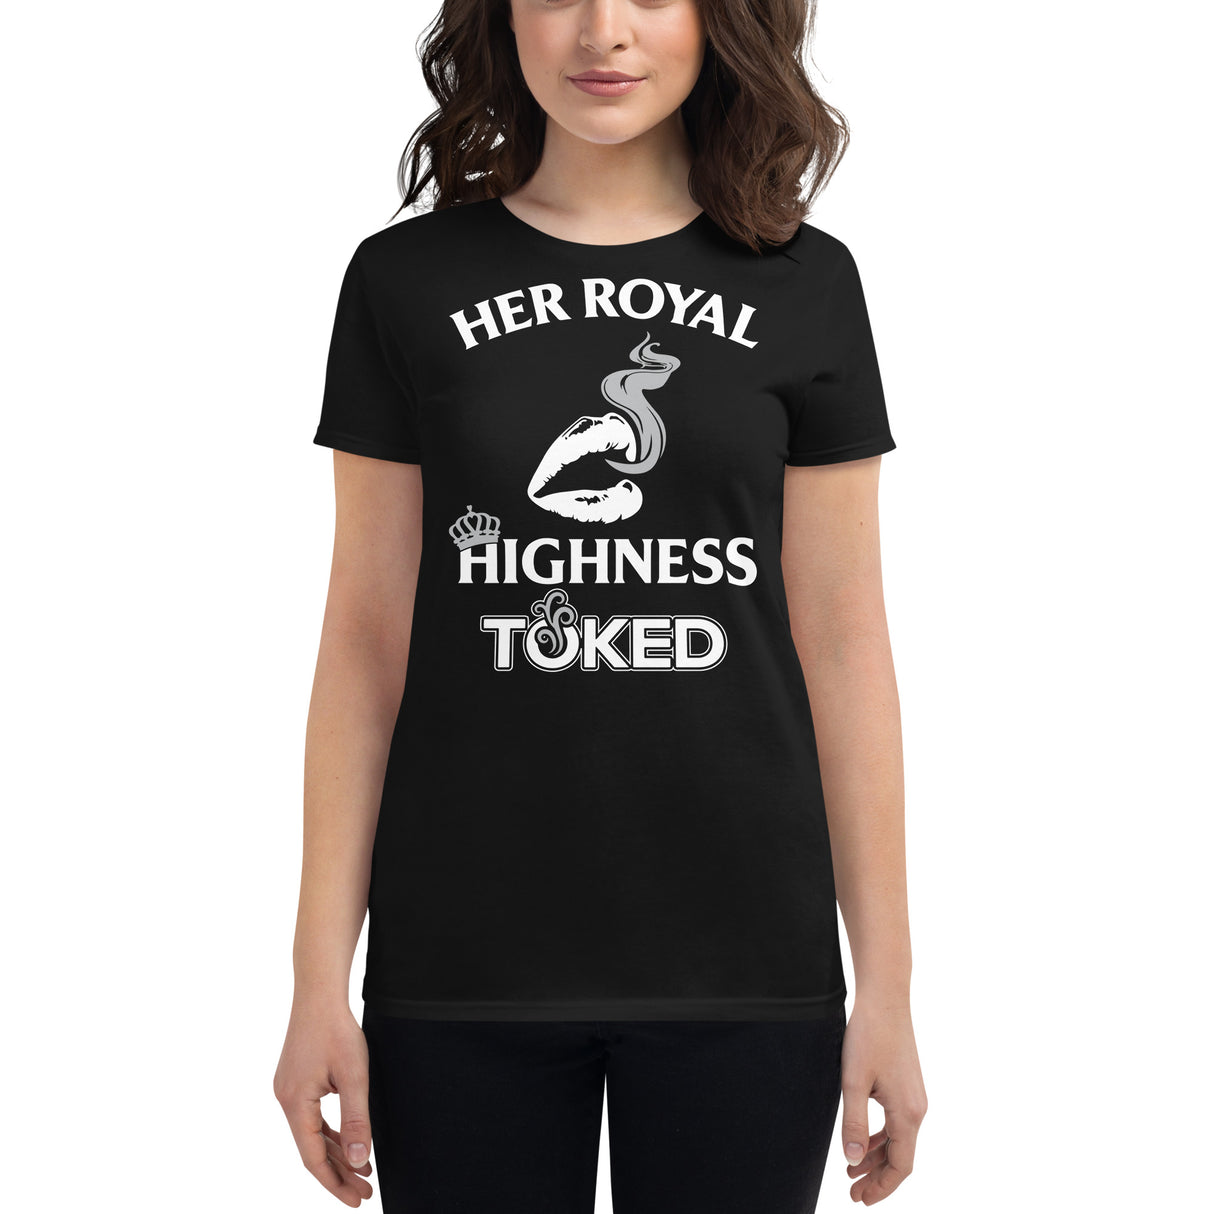 Her Royal Highness T-Shirt